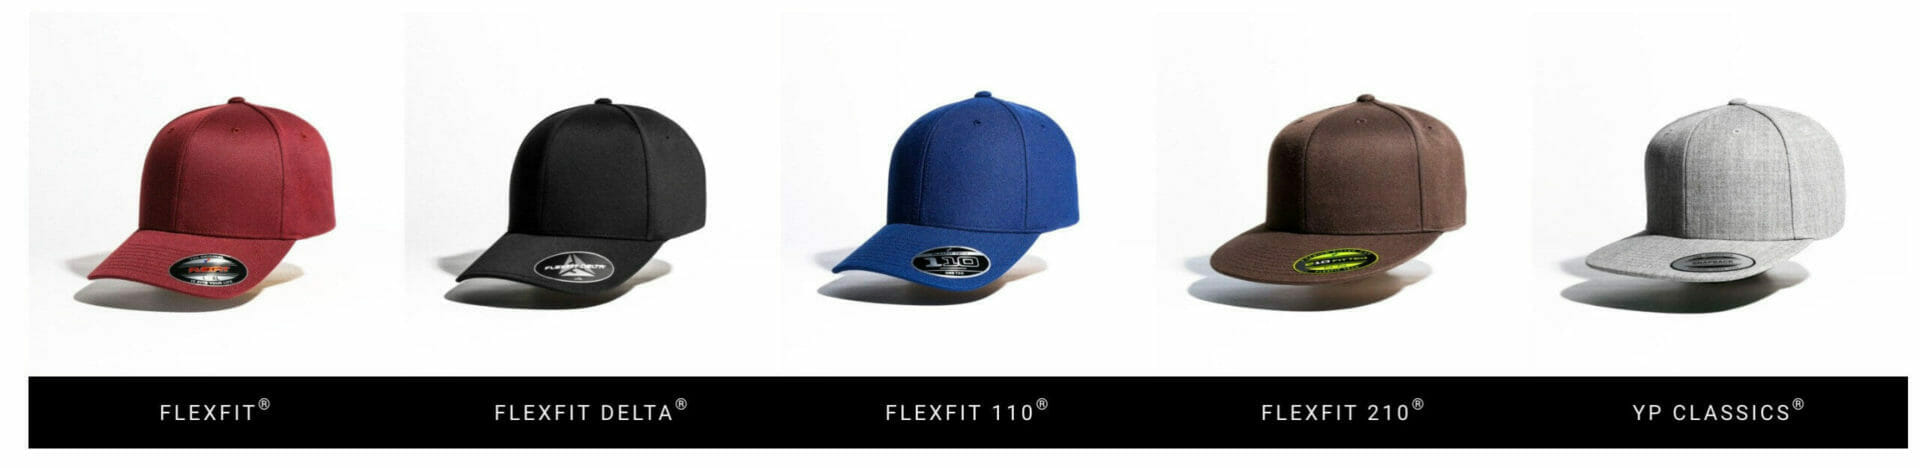 fflexfit hats